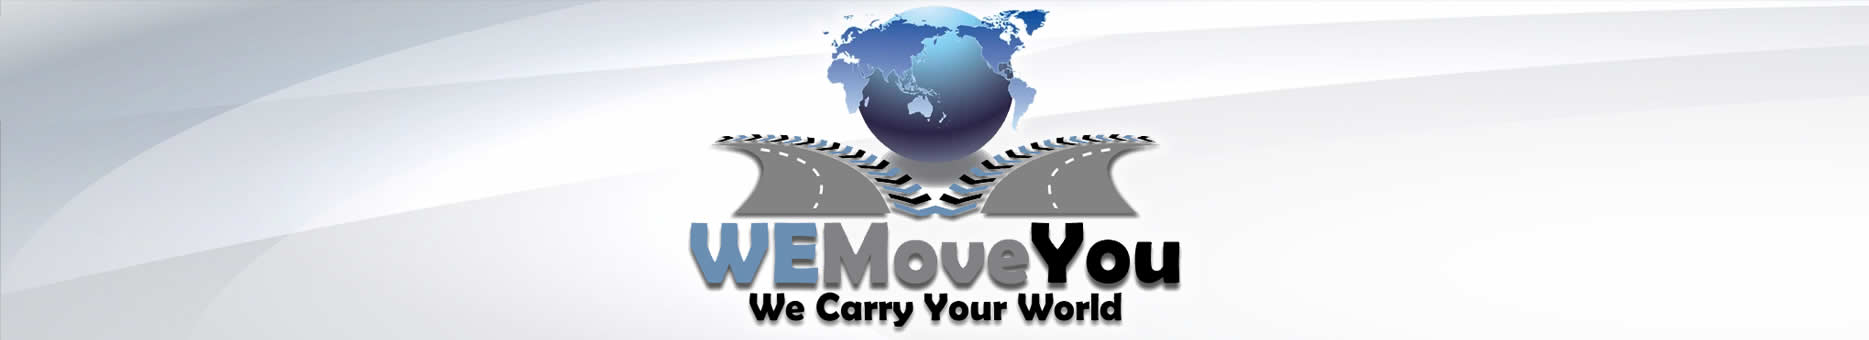 We Move You (biz)